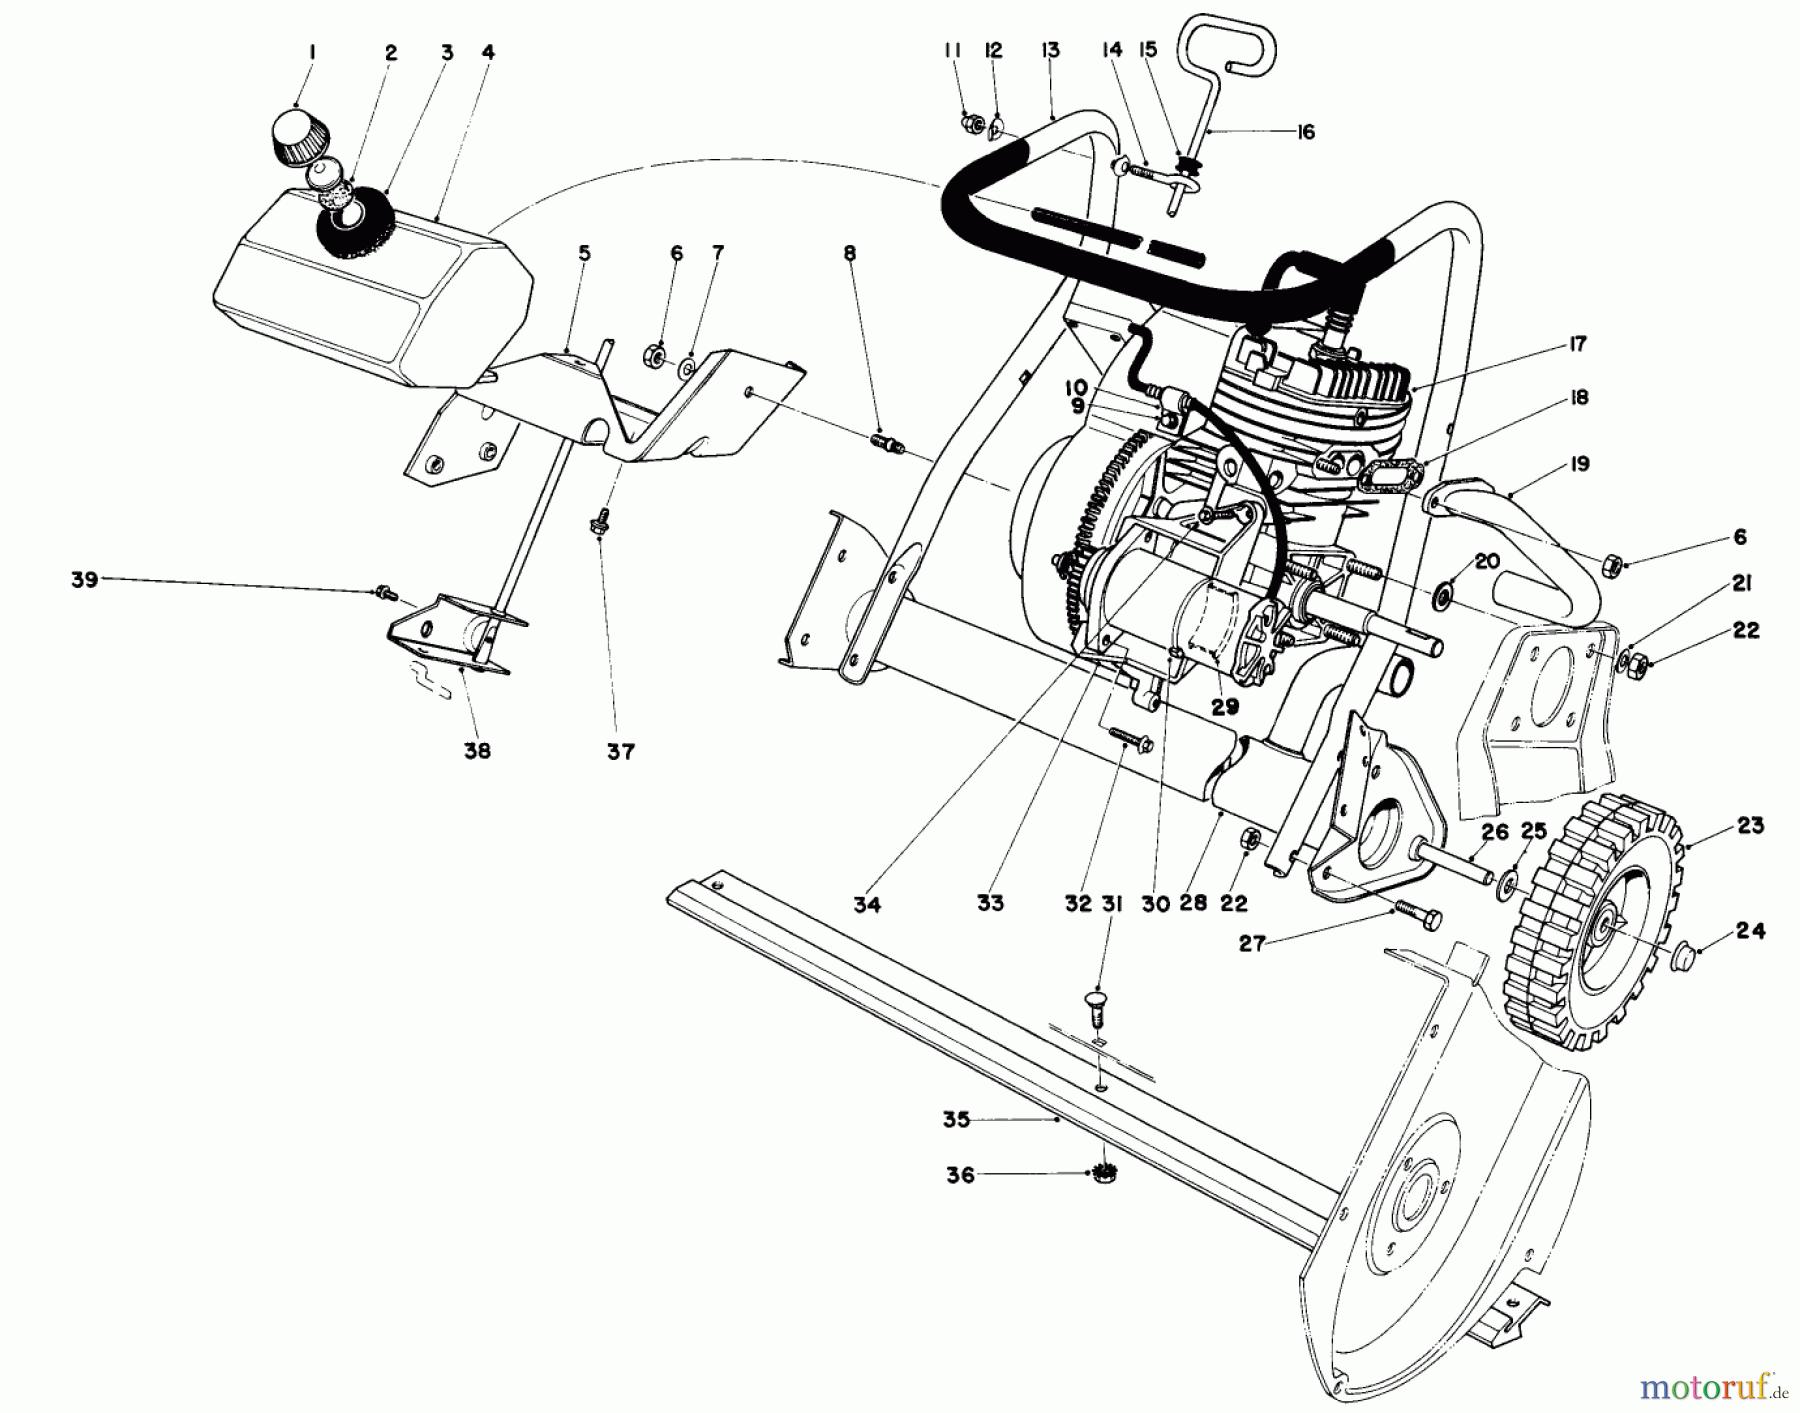  Toro Neu Snow Blowers/Snow Throwers Seite 1 38130 (S-200) - Toro S-200 Snowthrower, 1980 (0015001-0499999) ENGINE ASSEMBLY (MODEL 38130)